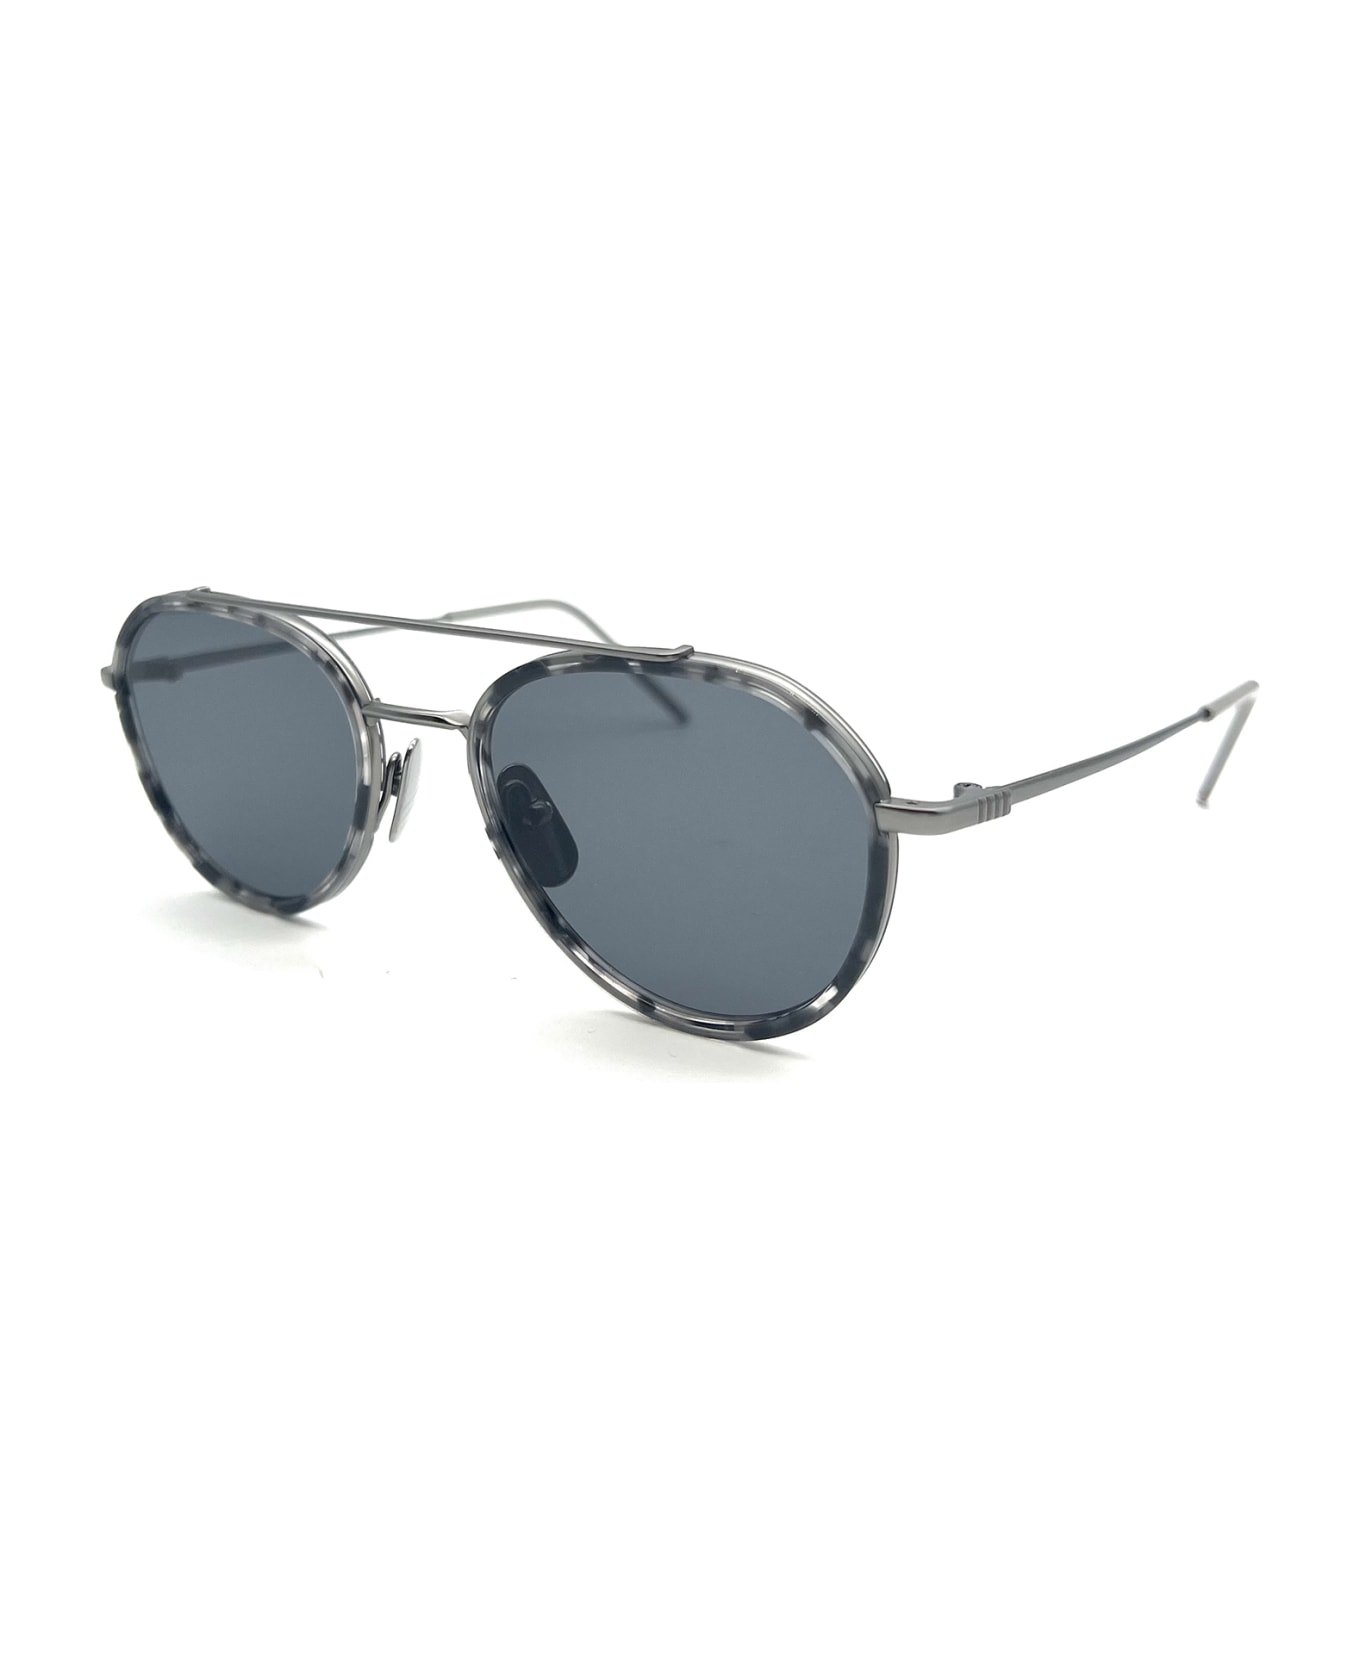 Thom Browne Oval Frame Sunglasses - Dark Grey